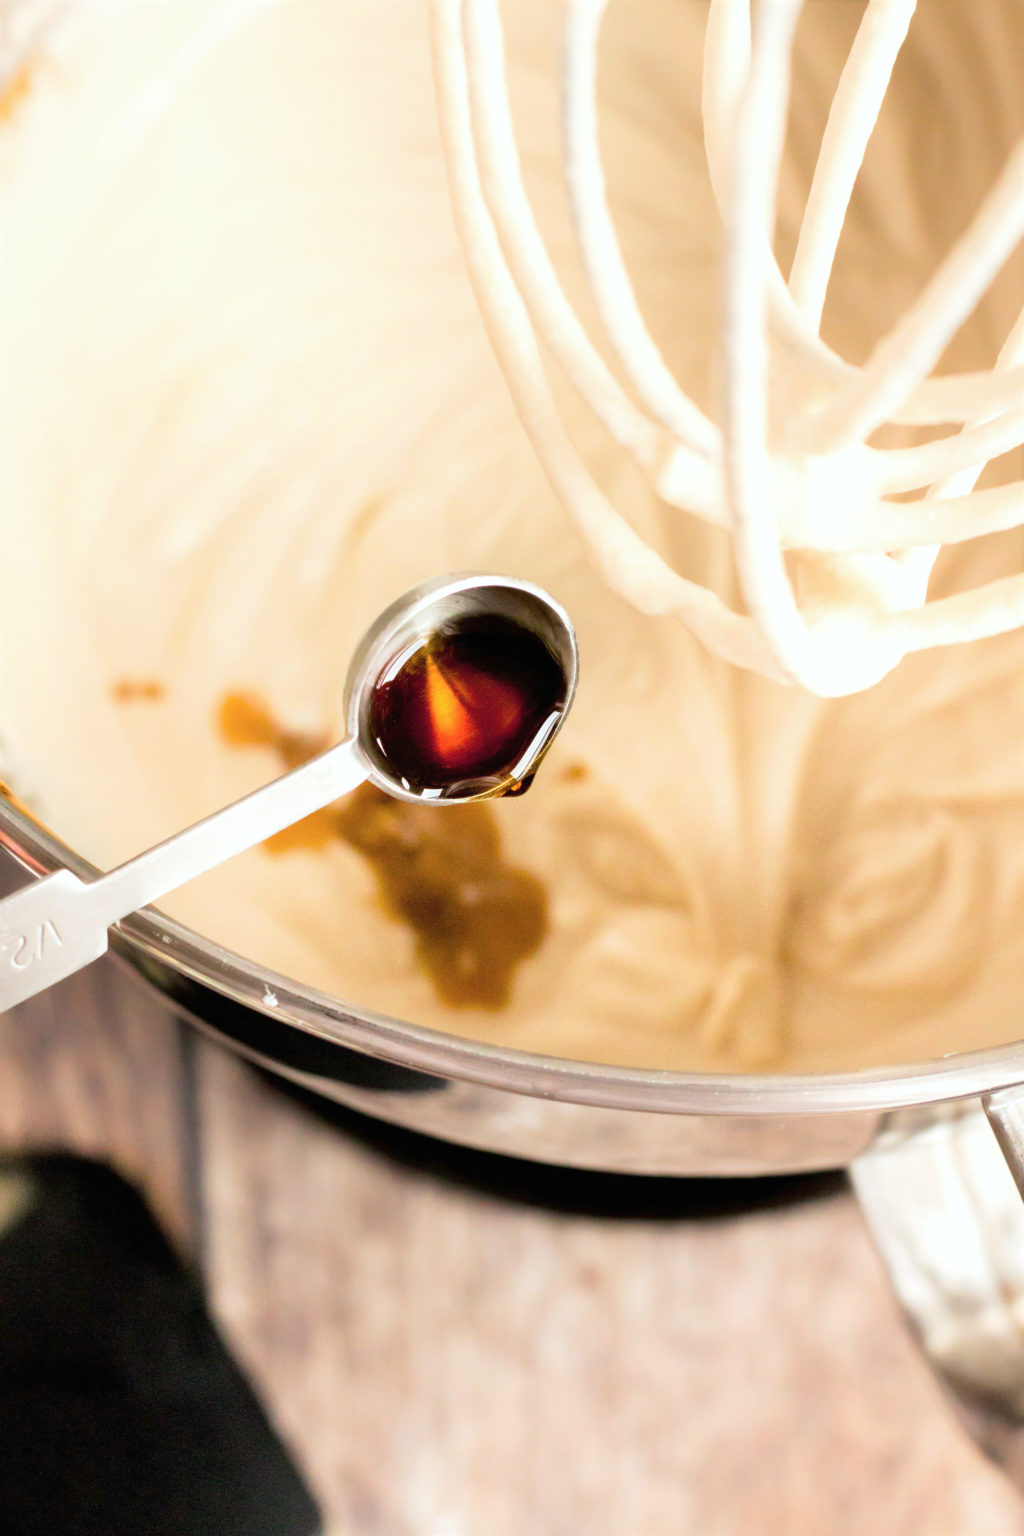 Vanilla is poured into cream mixture.